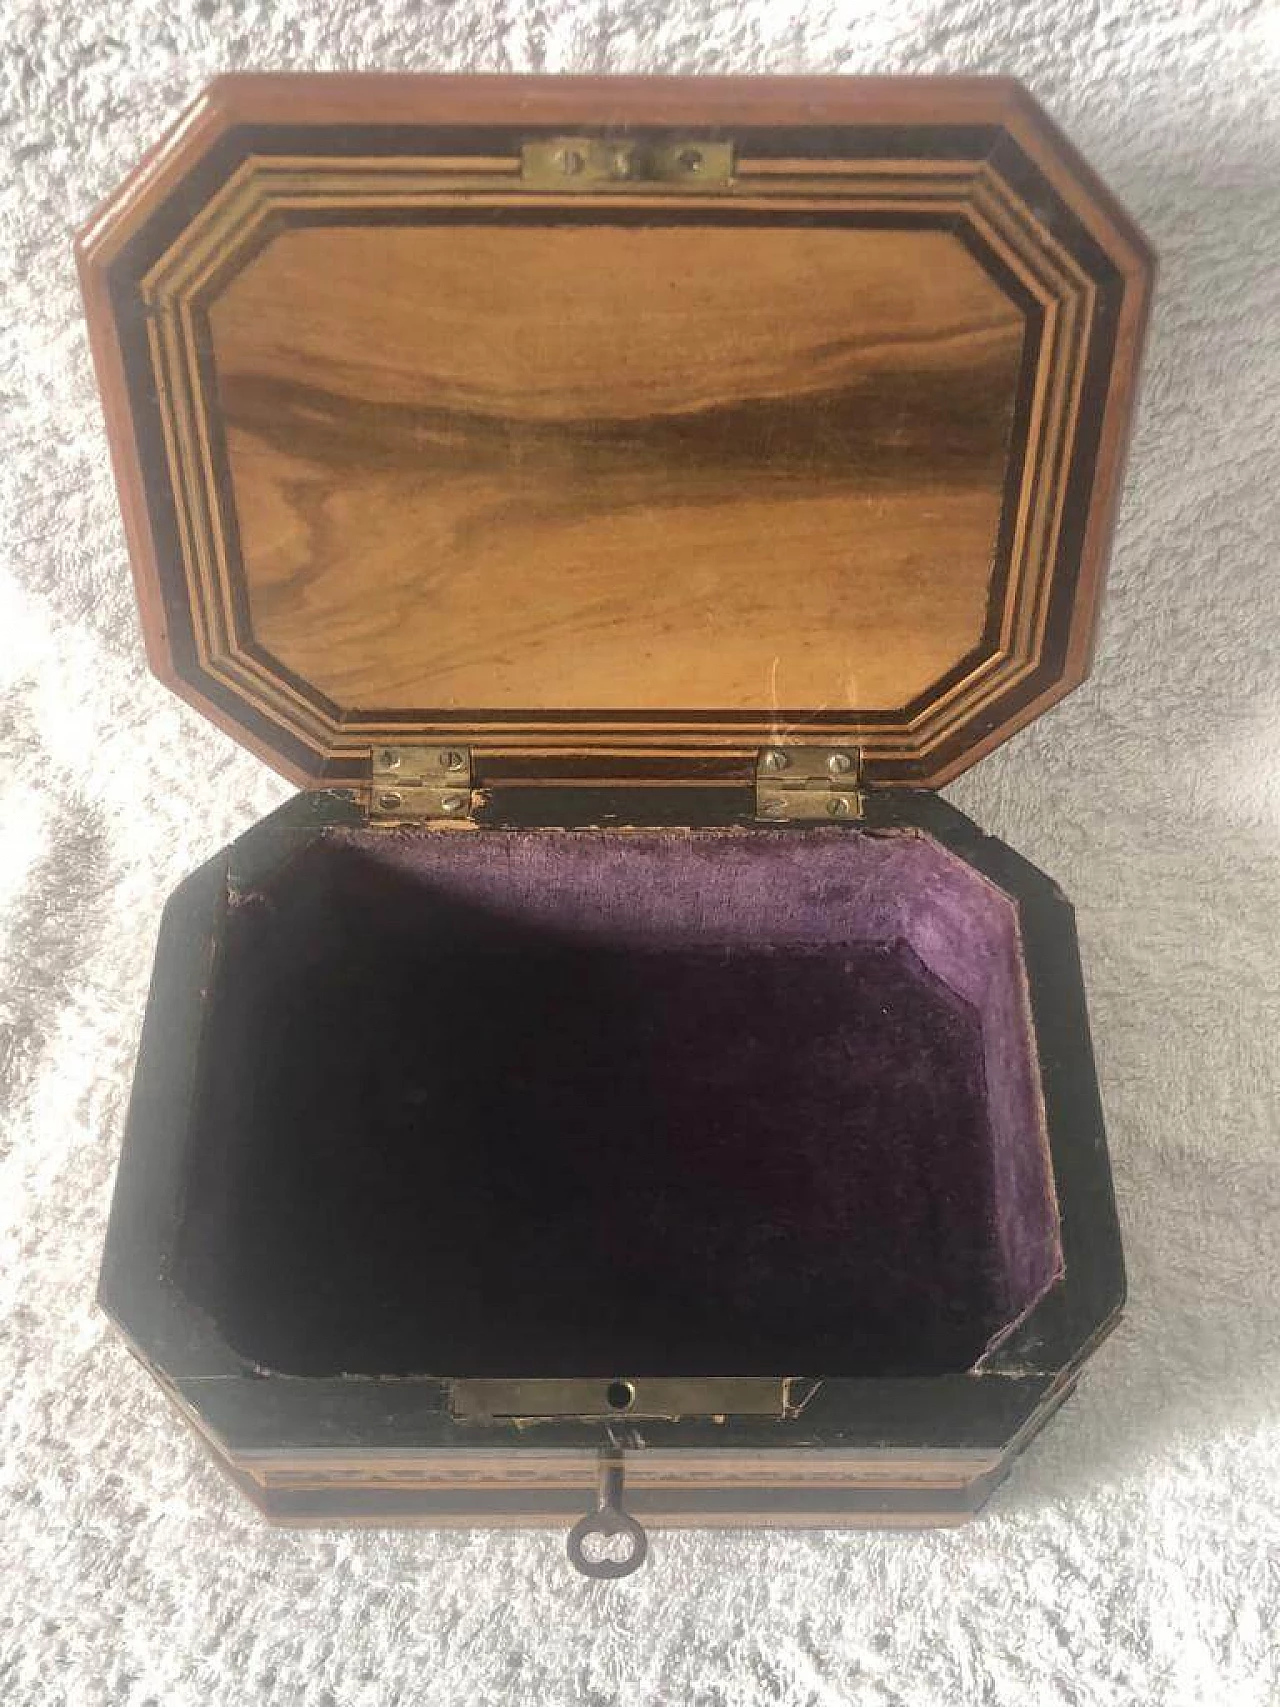 Sorrentine jewelry box in inlaid wood, 19th century 1400591